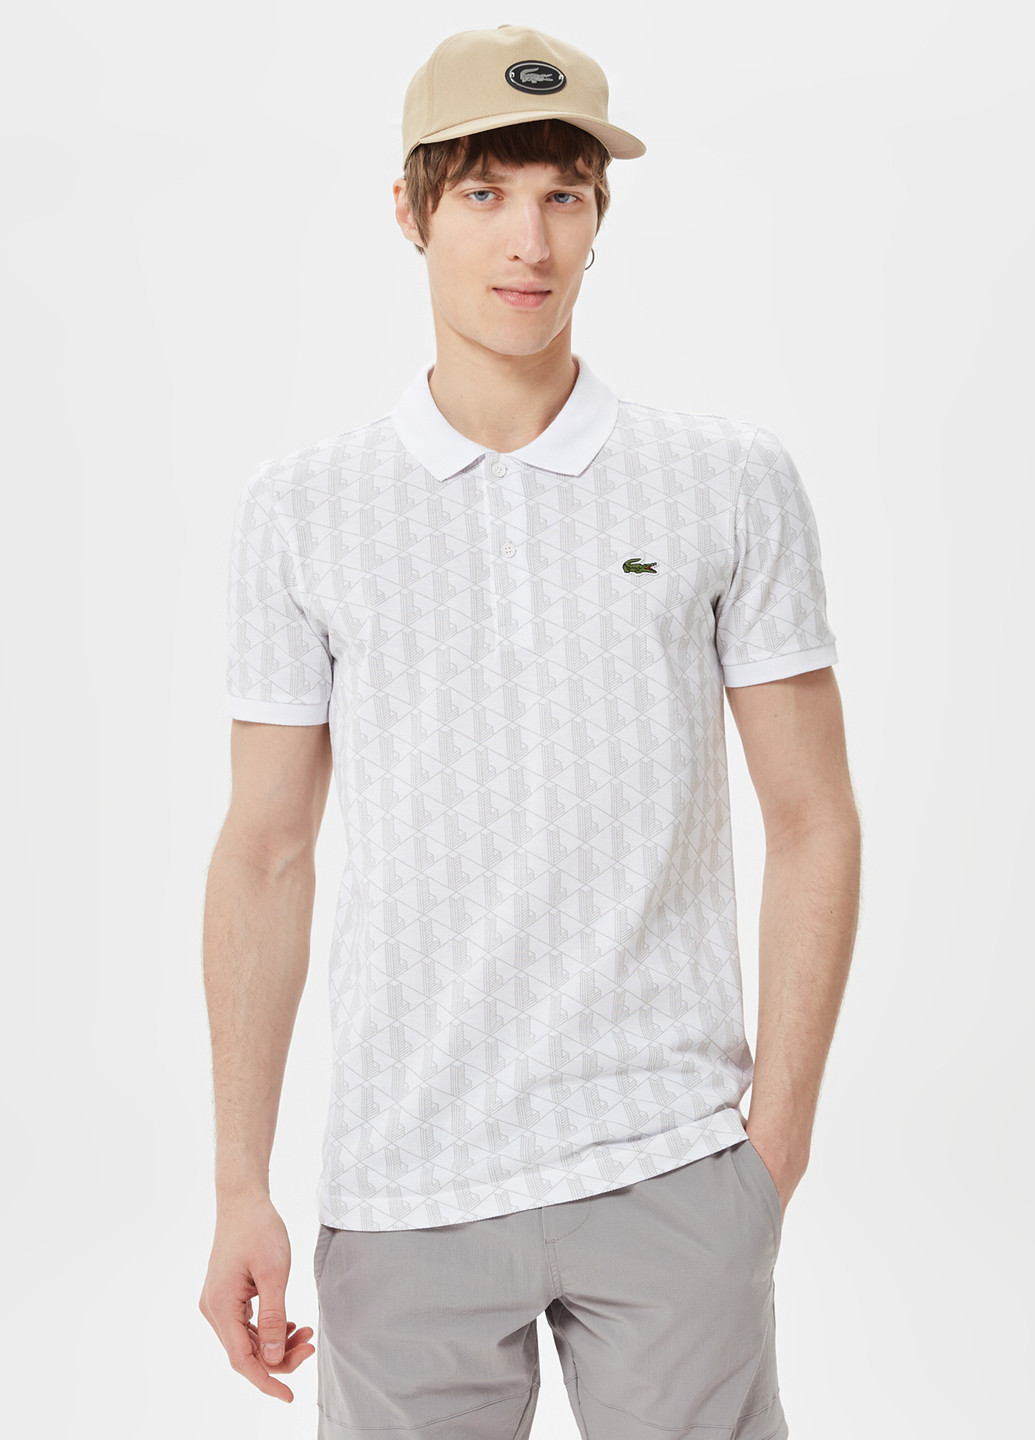 Белая футболка-поло для мужчин Lacoste с геометрическим узором